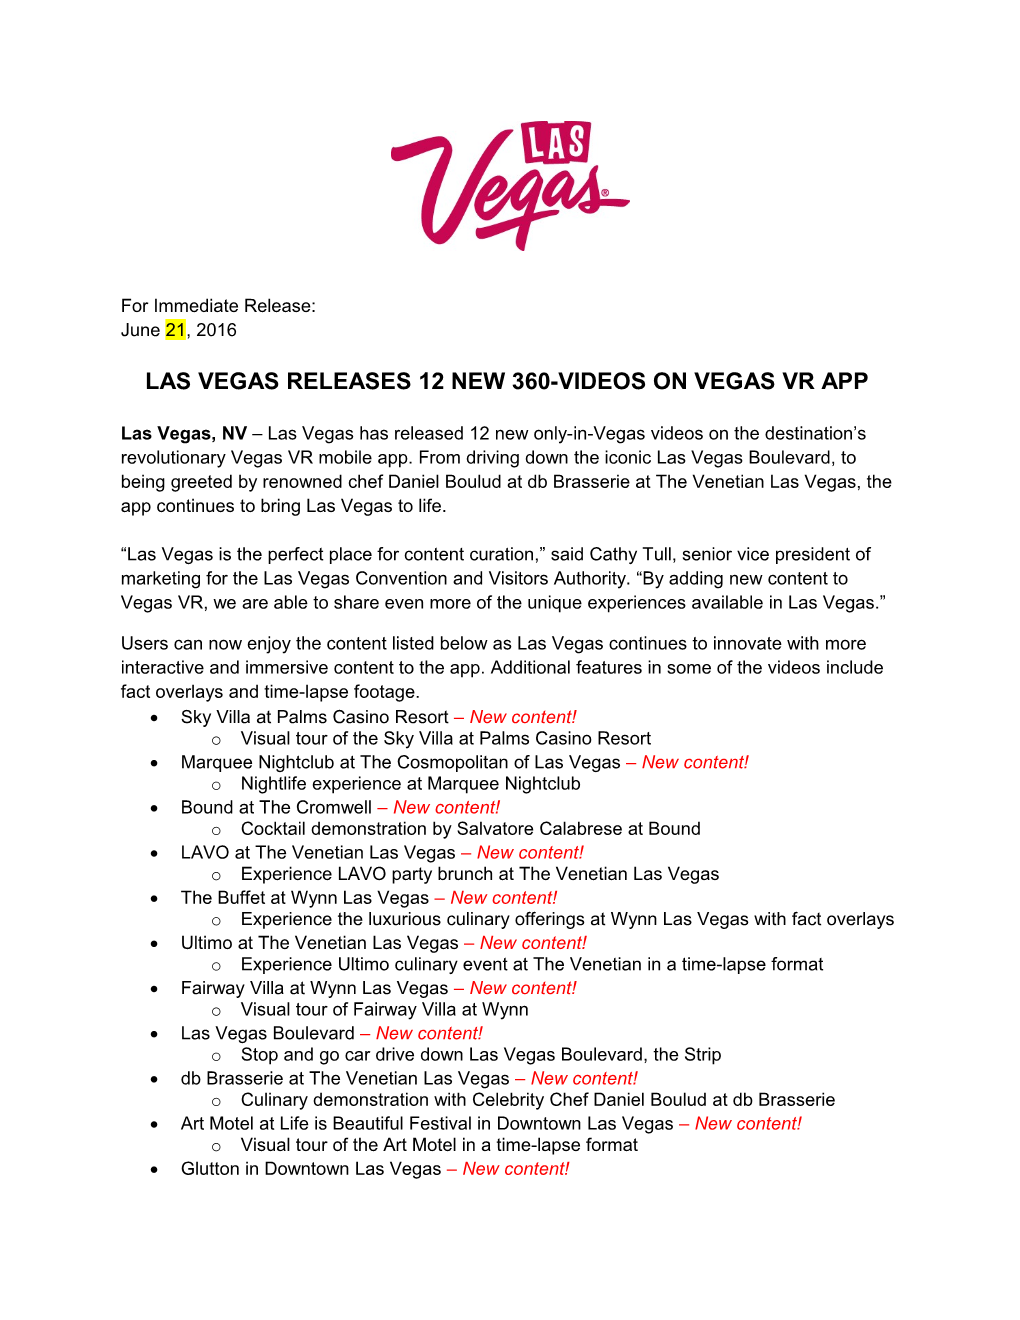 Las Vegas Releases 12 New 360-Videos on VEGAS VR APP